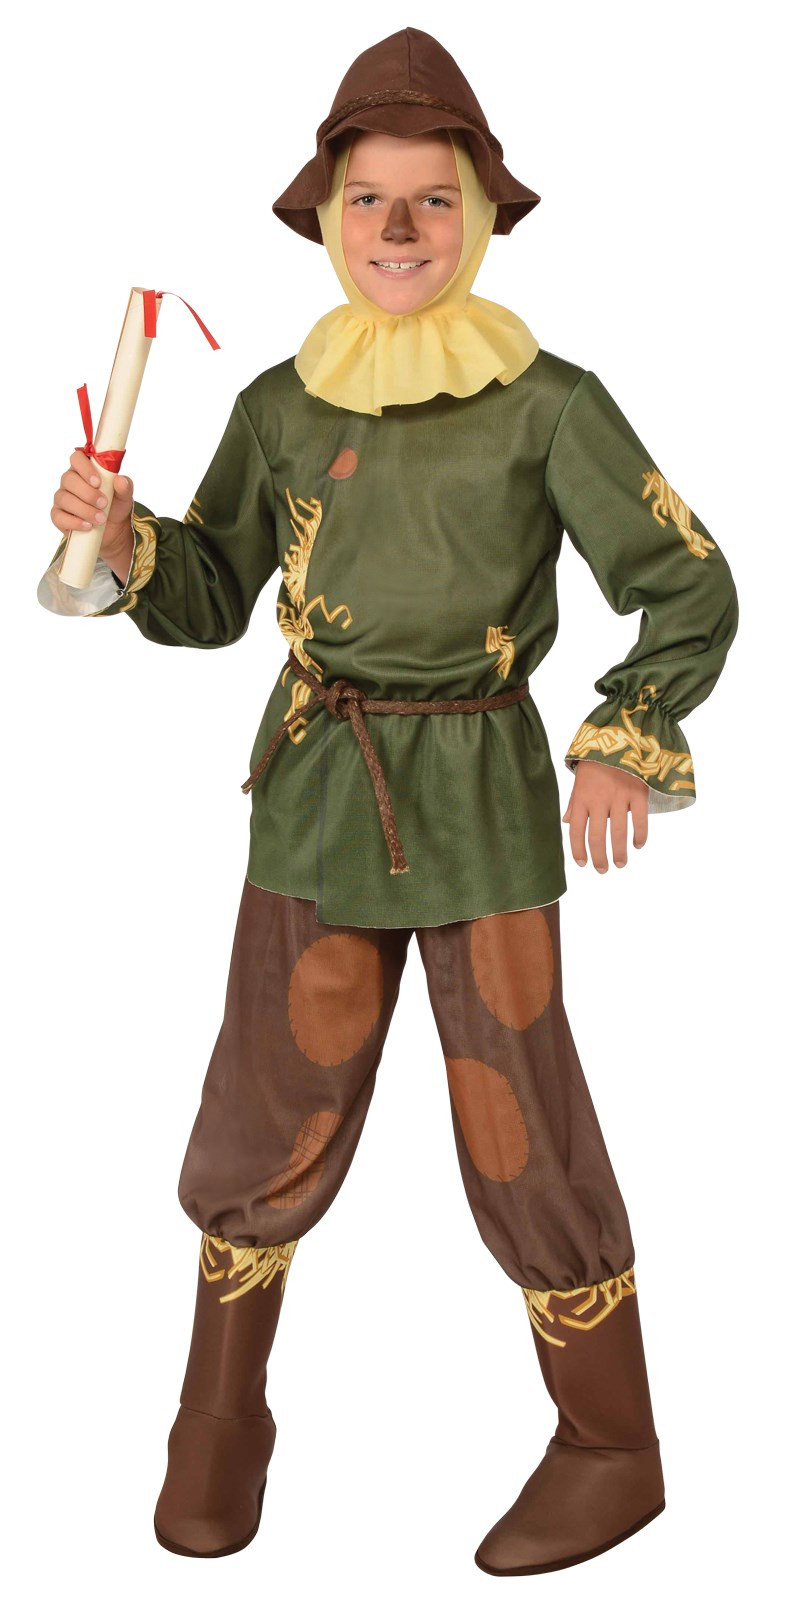 DIY Scarecrow Costume Wizard Of Oz
 The Wizard of Oz Scarecrow Child Costume